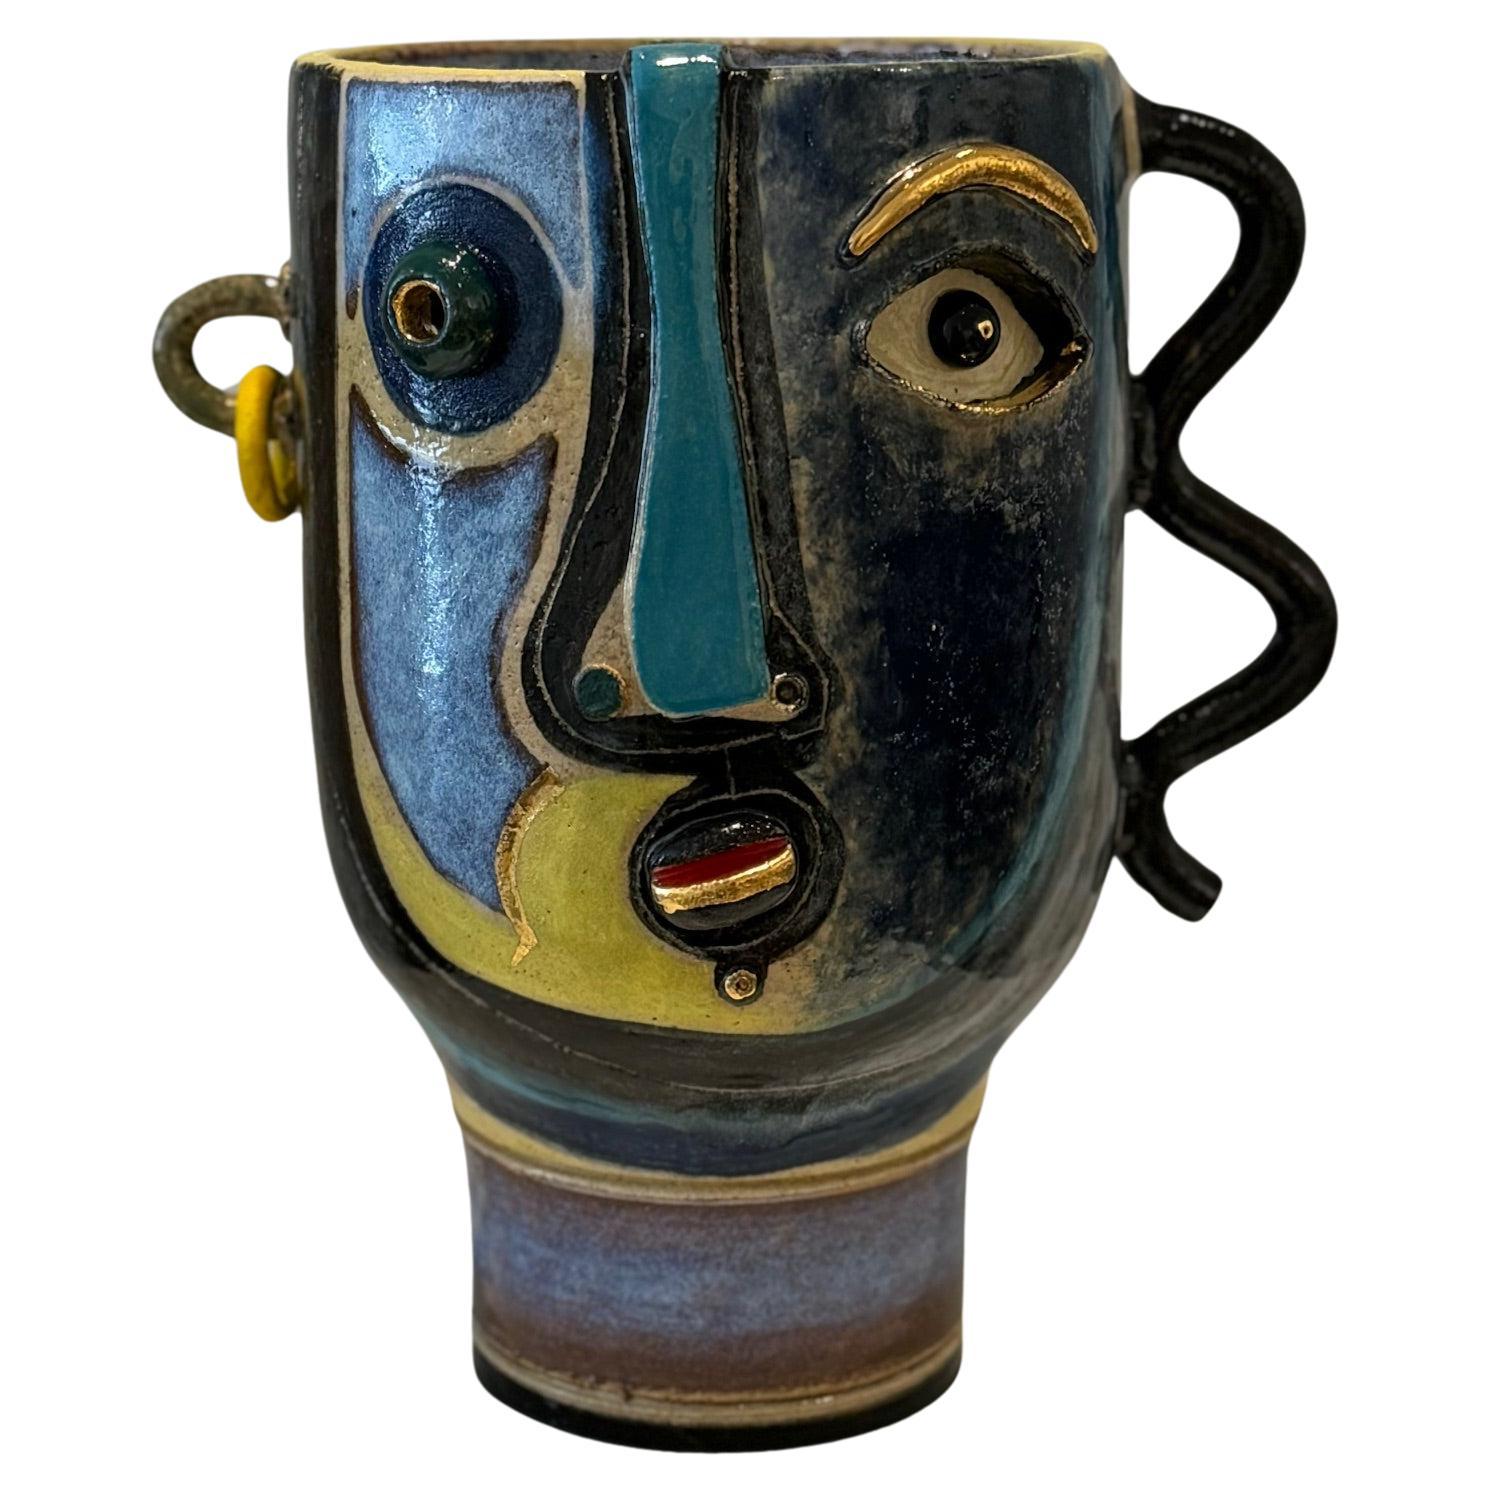 Ceramic Vase "Yoko" One of a kind Signed by French Ceramist DALO